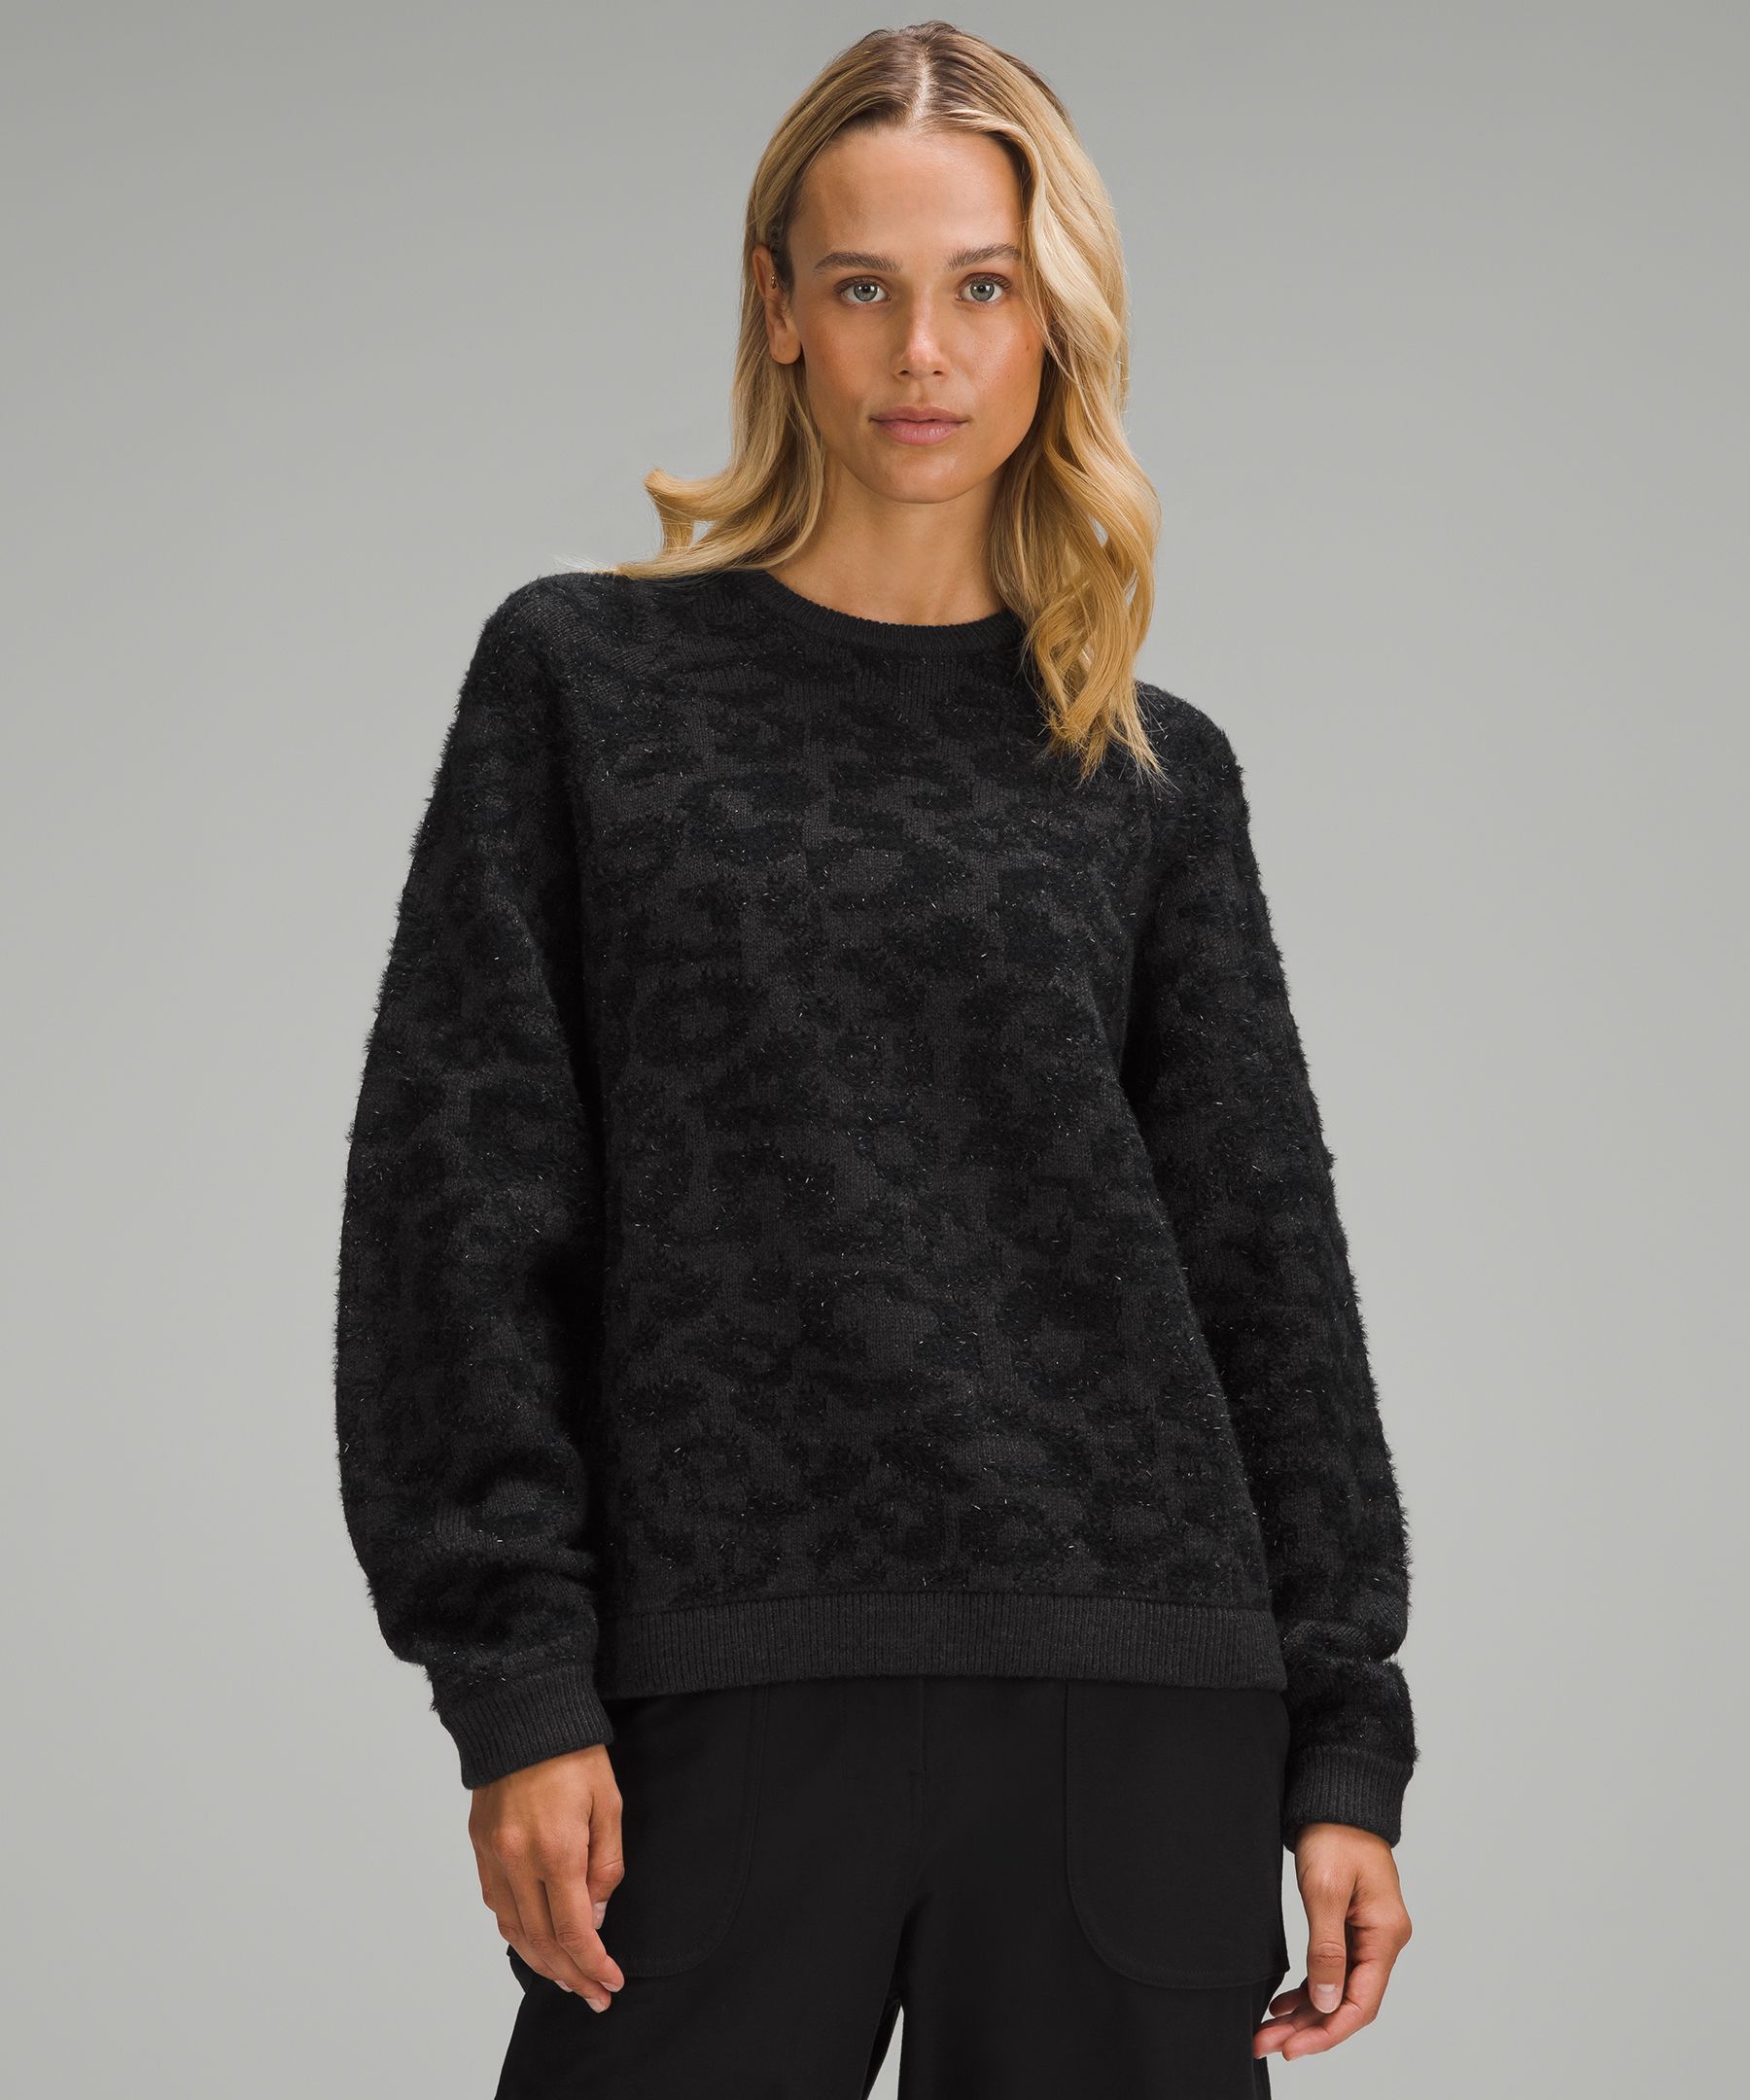 Lululemon Wool-blend Jacquard Sweater